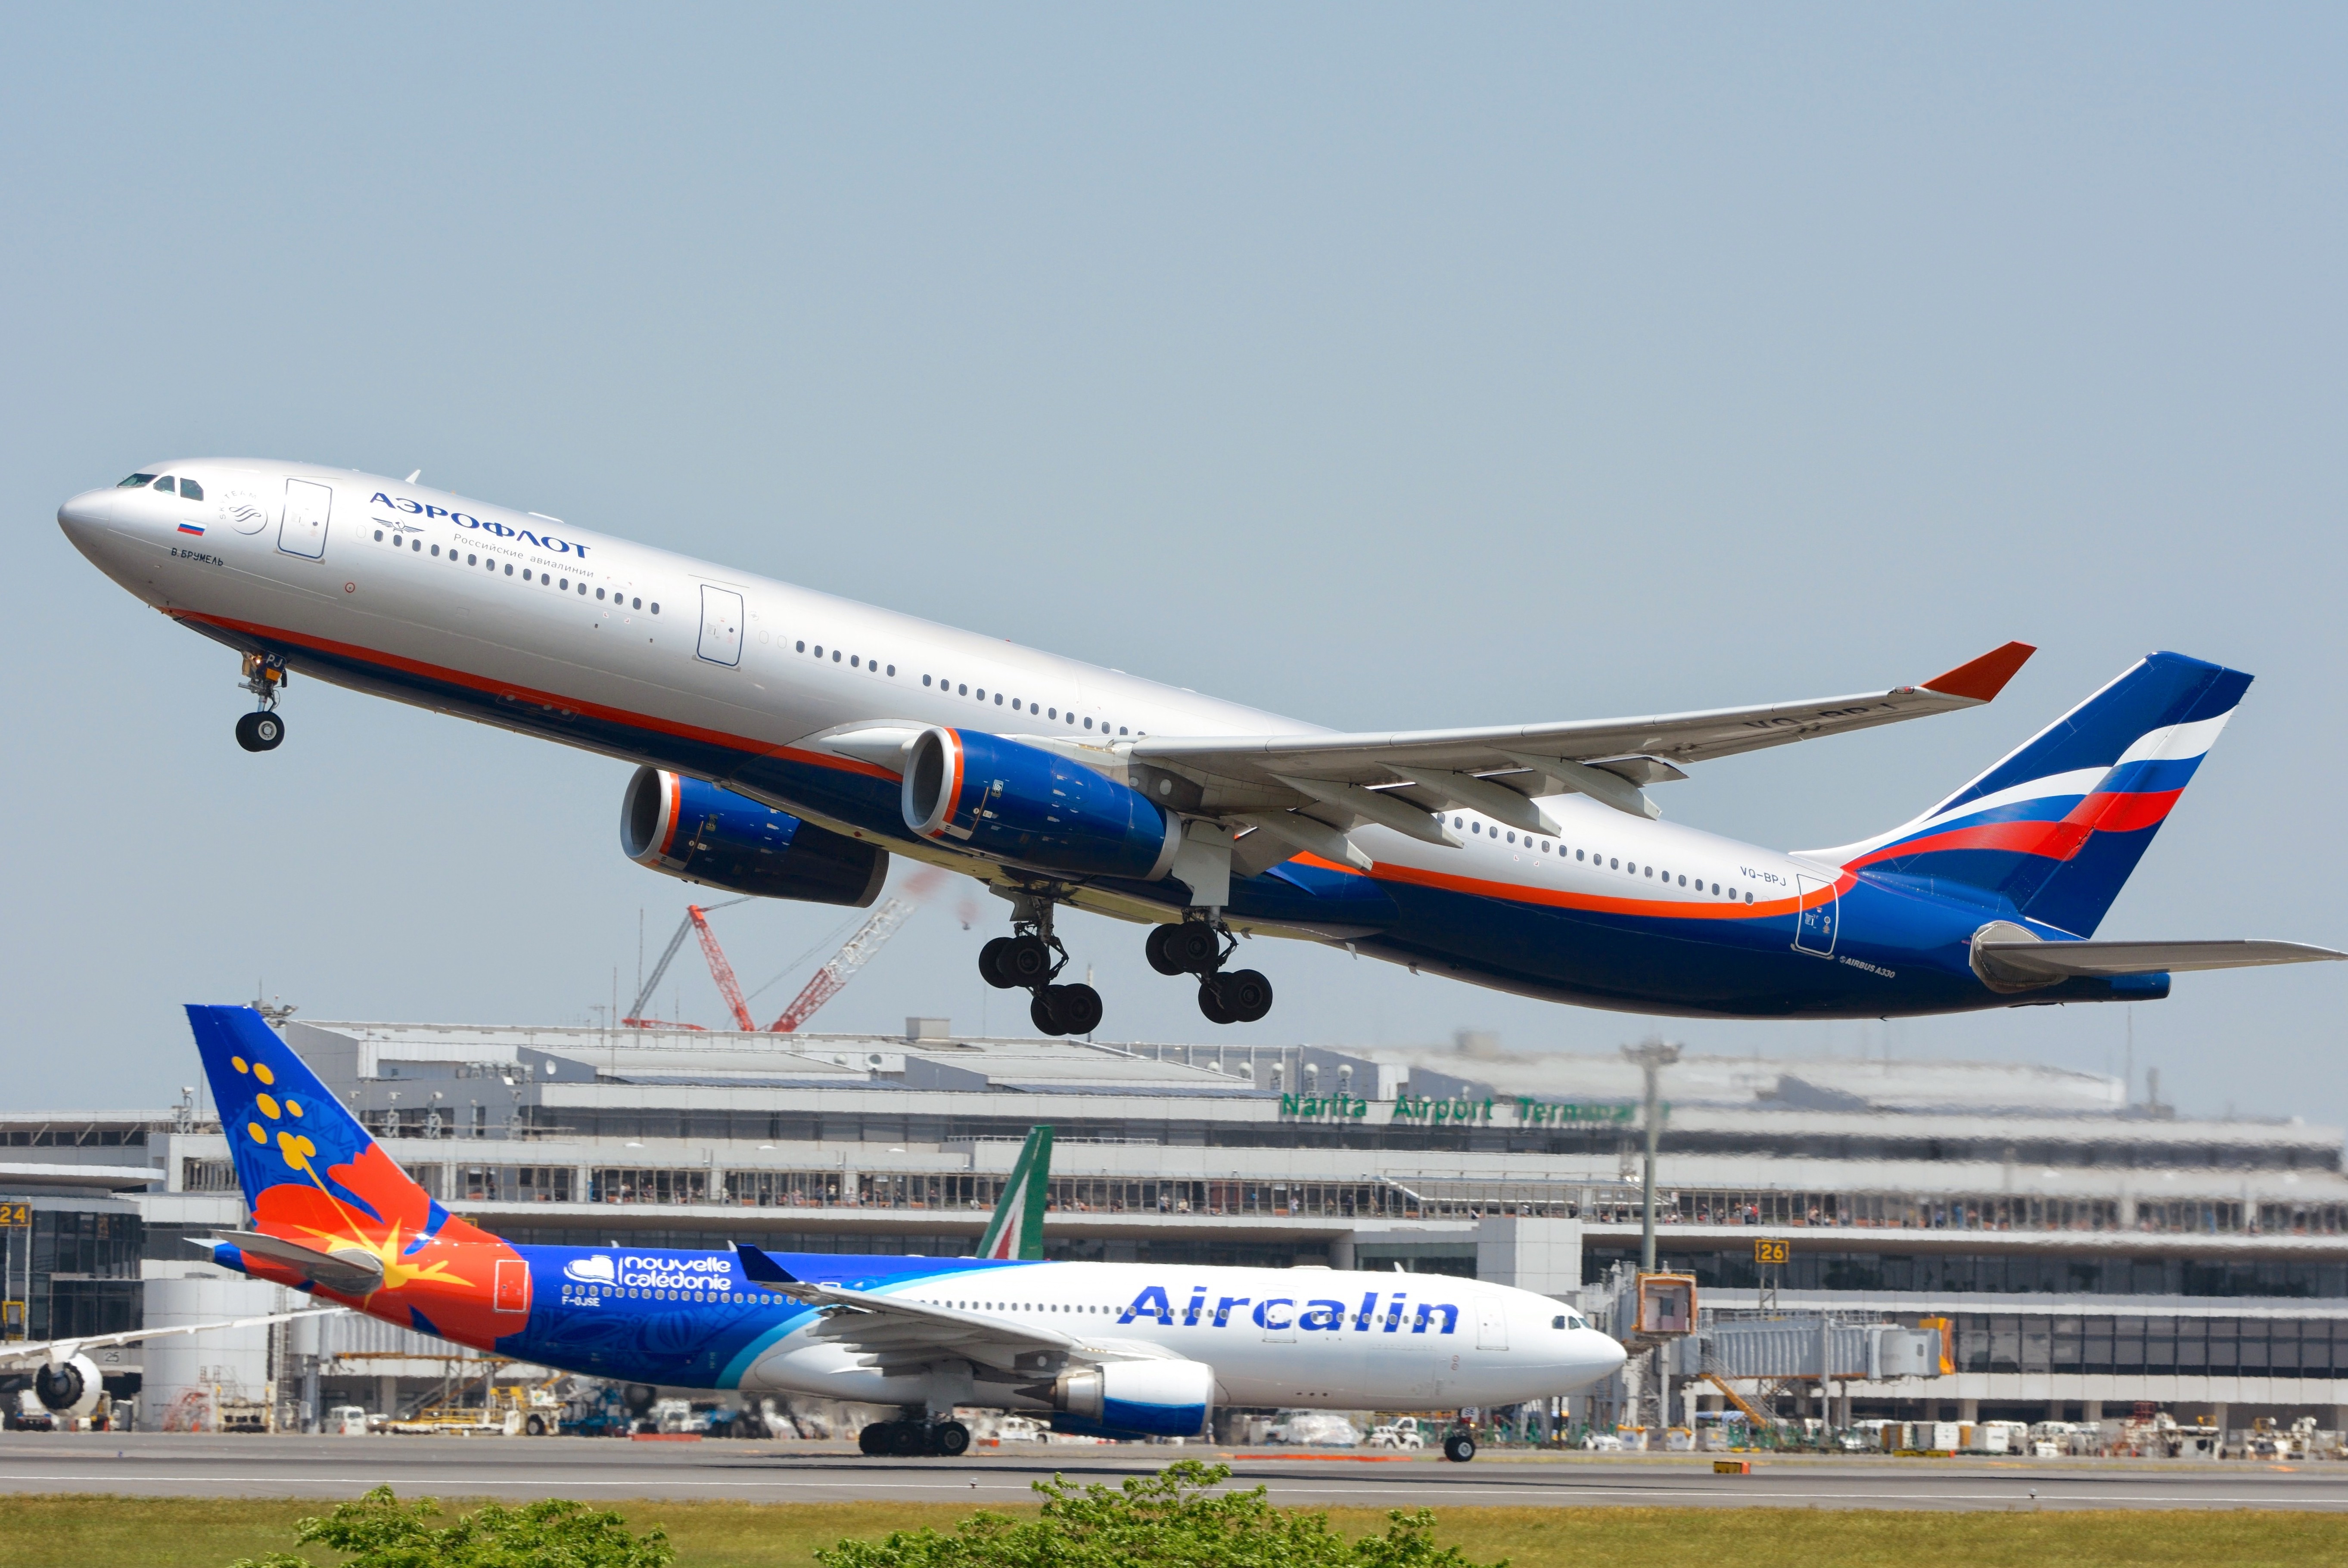 File:Aeroflot, Airbus A330-300, VQ-BPJ - NRT.jpg - Wikimedia Commons